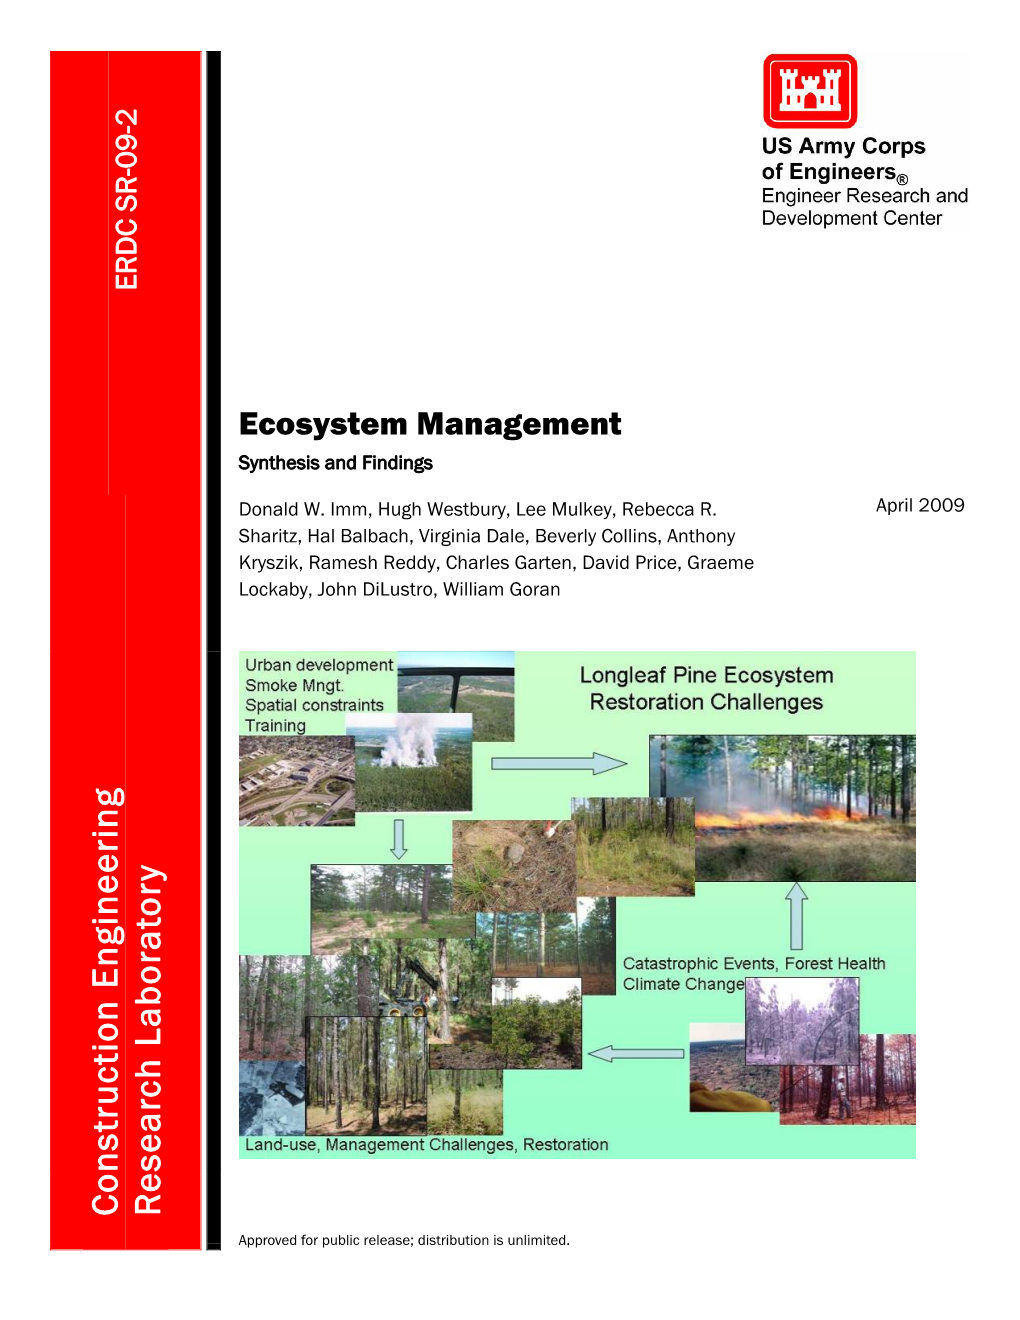 ERDC SR-09-2, Ecosystem Management